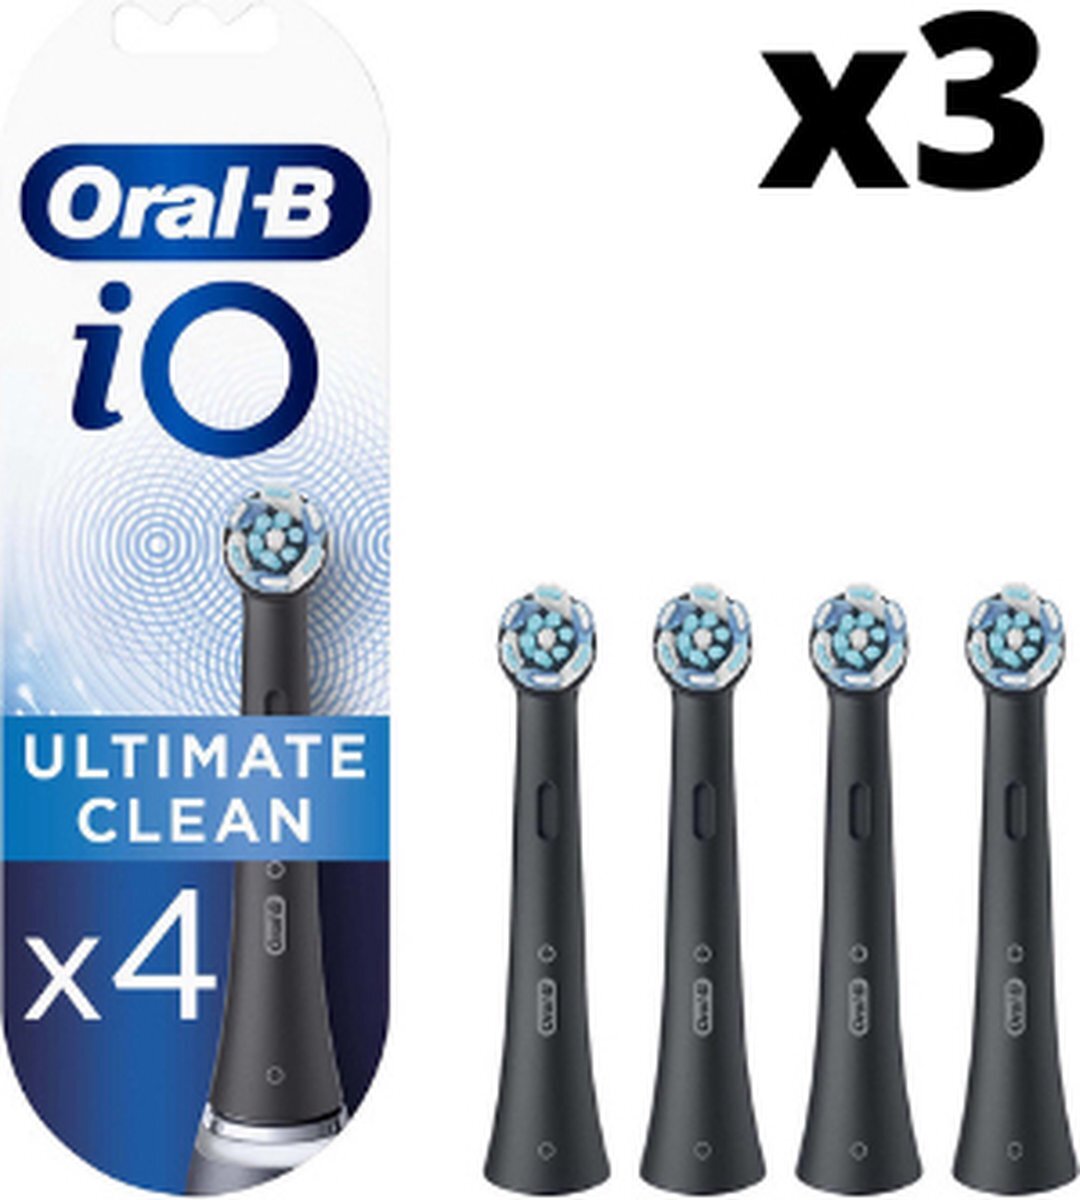 Oral-B Oral-B iO Ultimate Clean Opzetborstels Zwart - 3 x 4 stuks - Voordeelverpakking